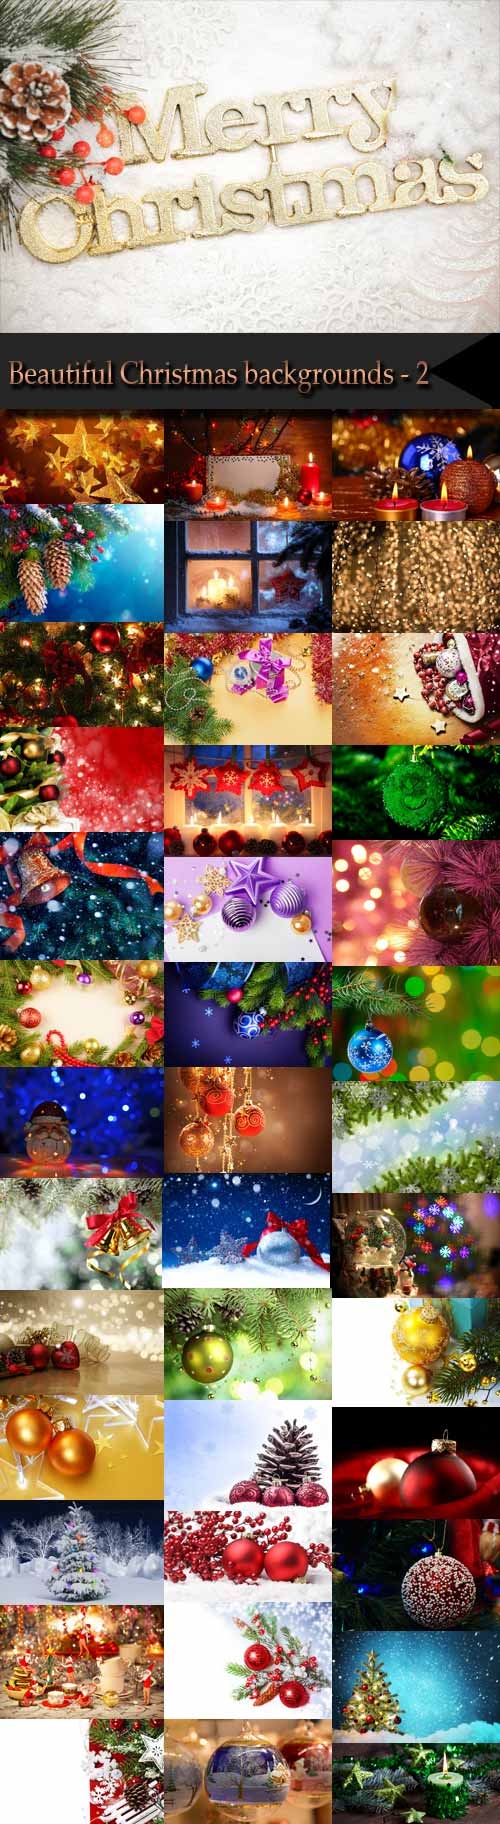 Beautiful Christmas backgrounds - 2